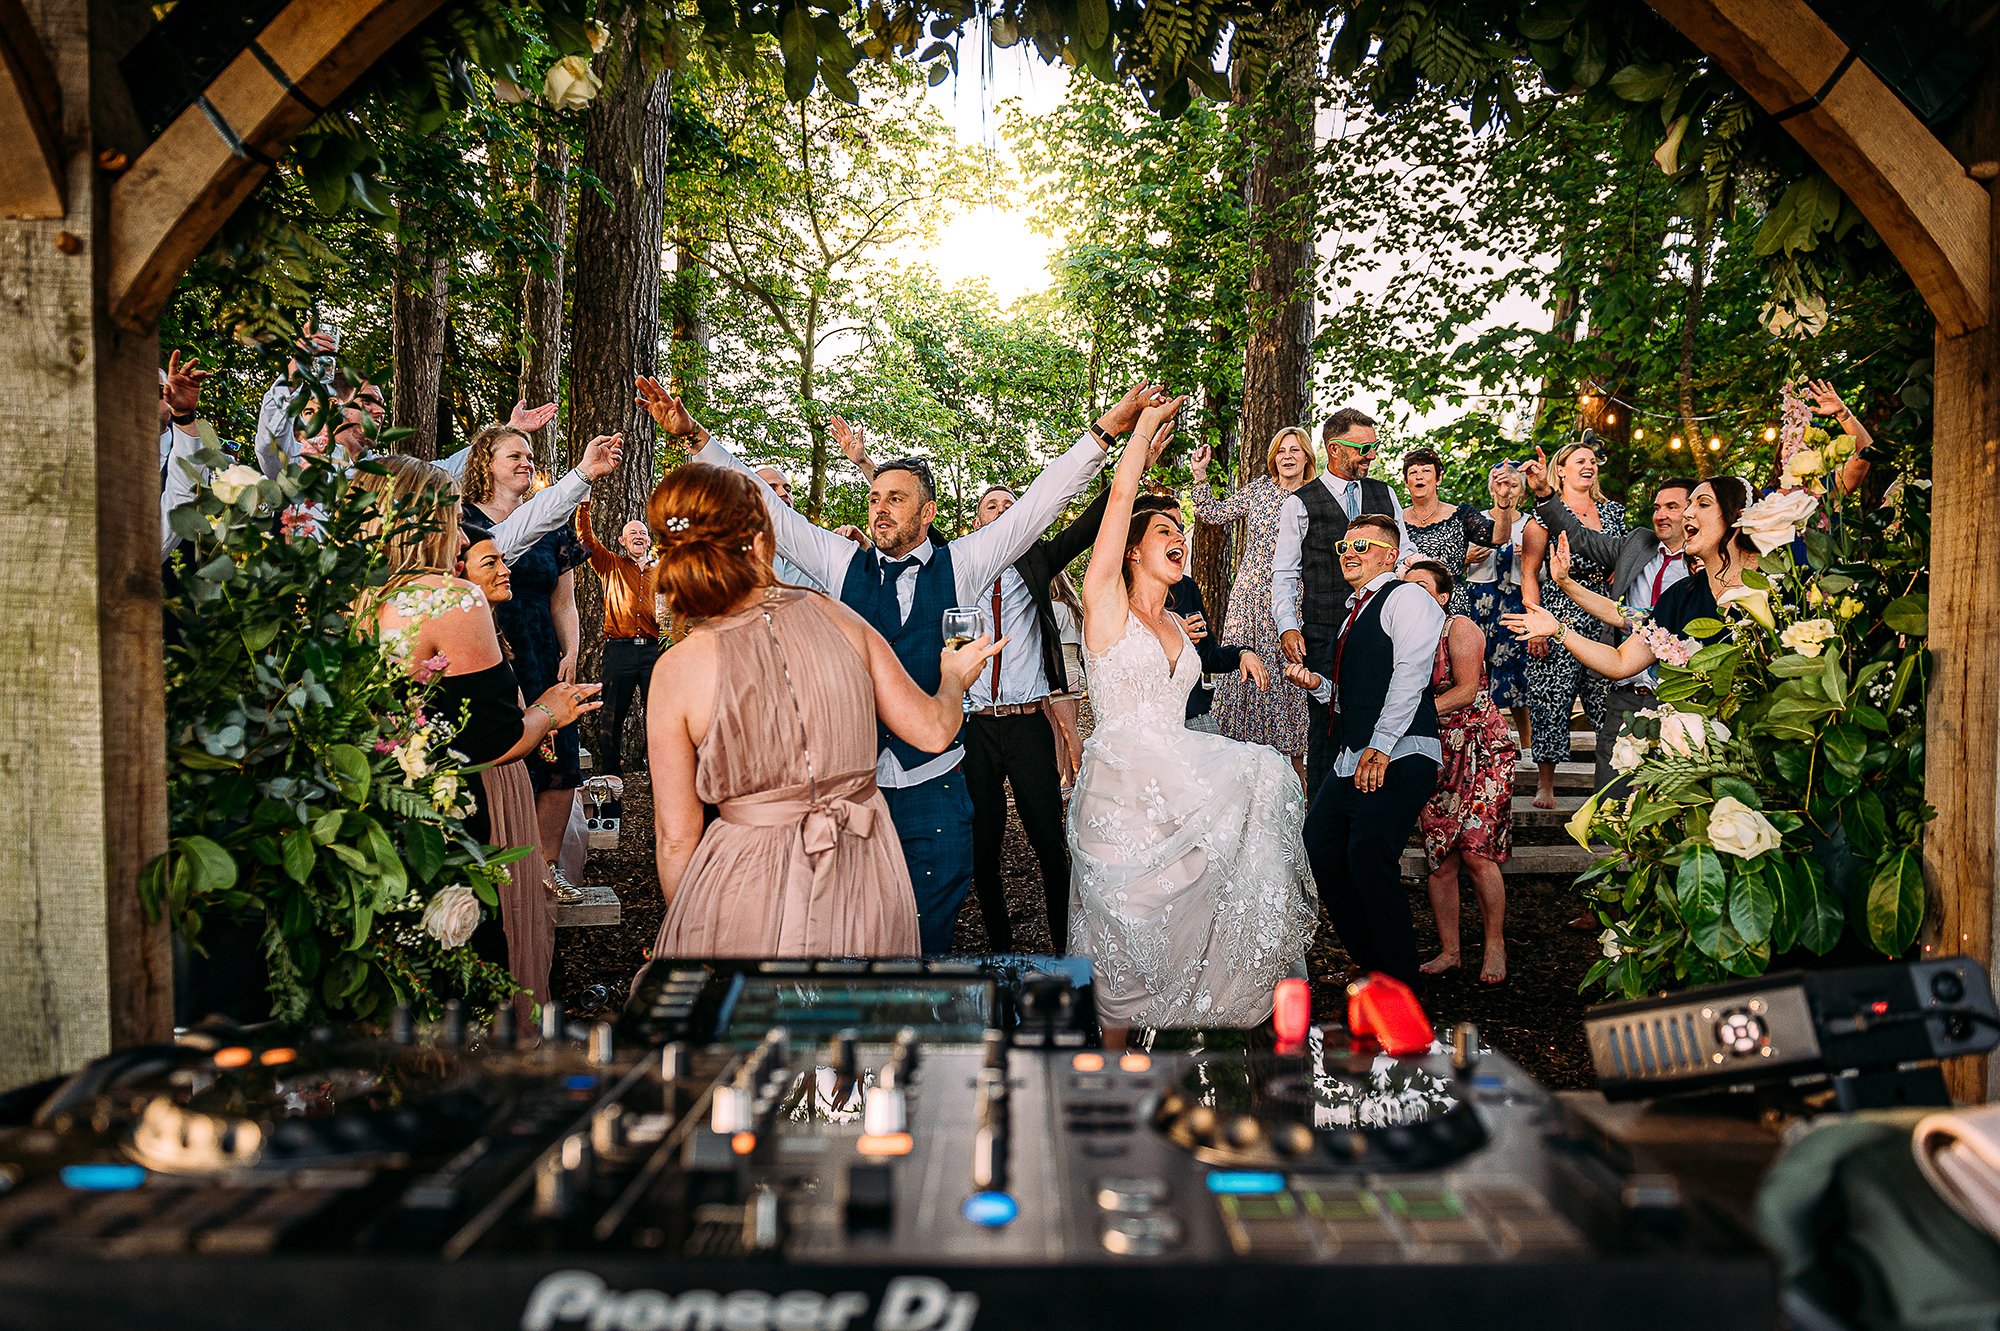  Outdoor wedding rave in the woods taken from behind the DJ decks. 